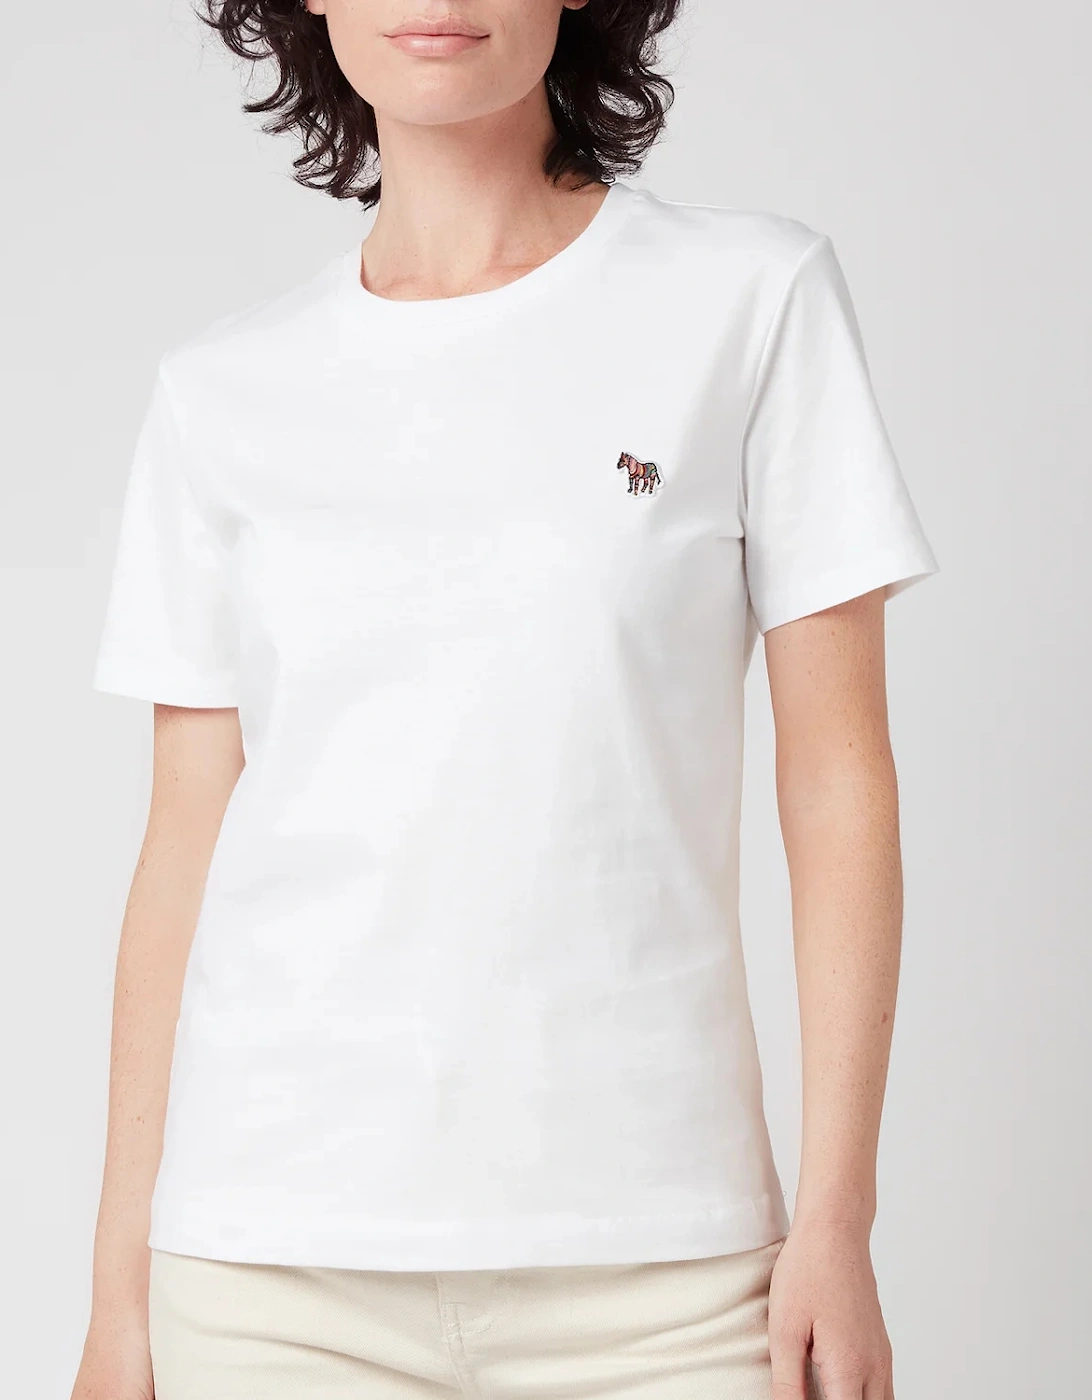 PS Women's Zebra T-Shirt - White - PS - Home - PS Women's Zebra T-Shirt - White, 2 of 1